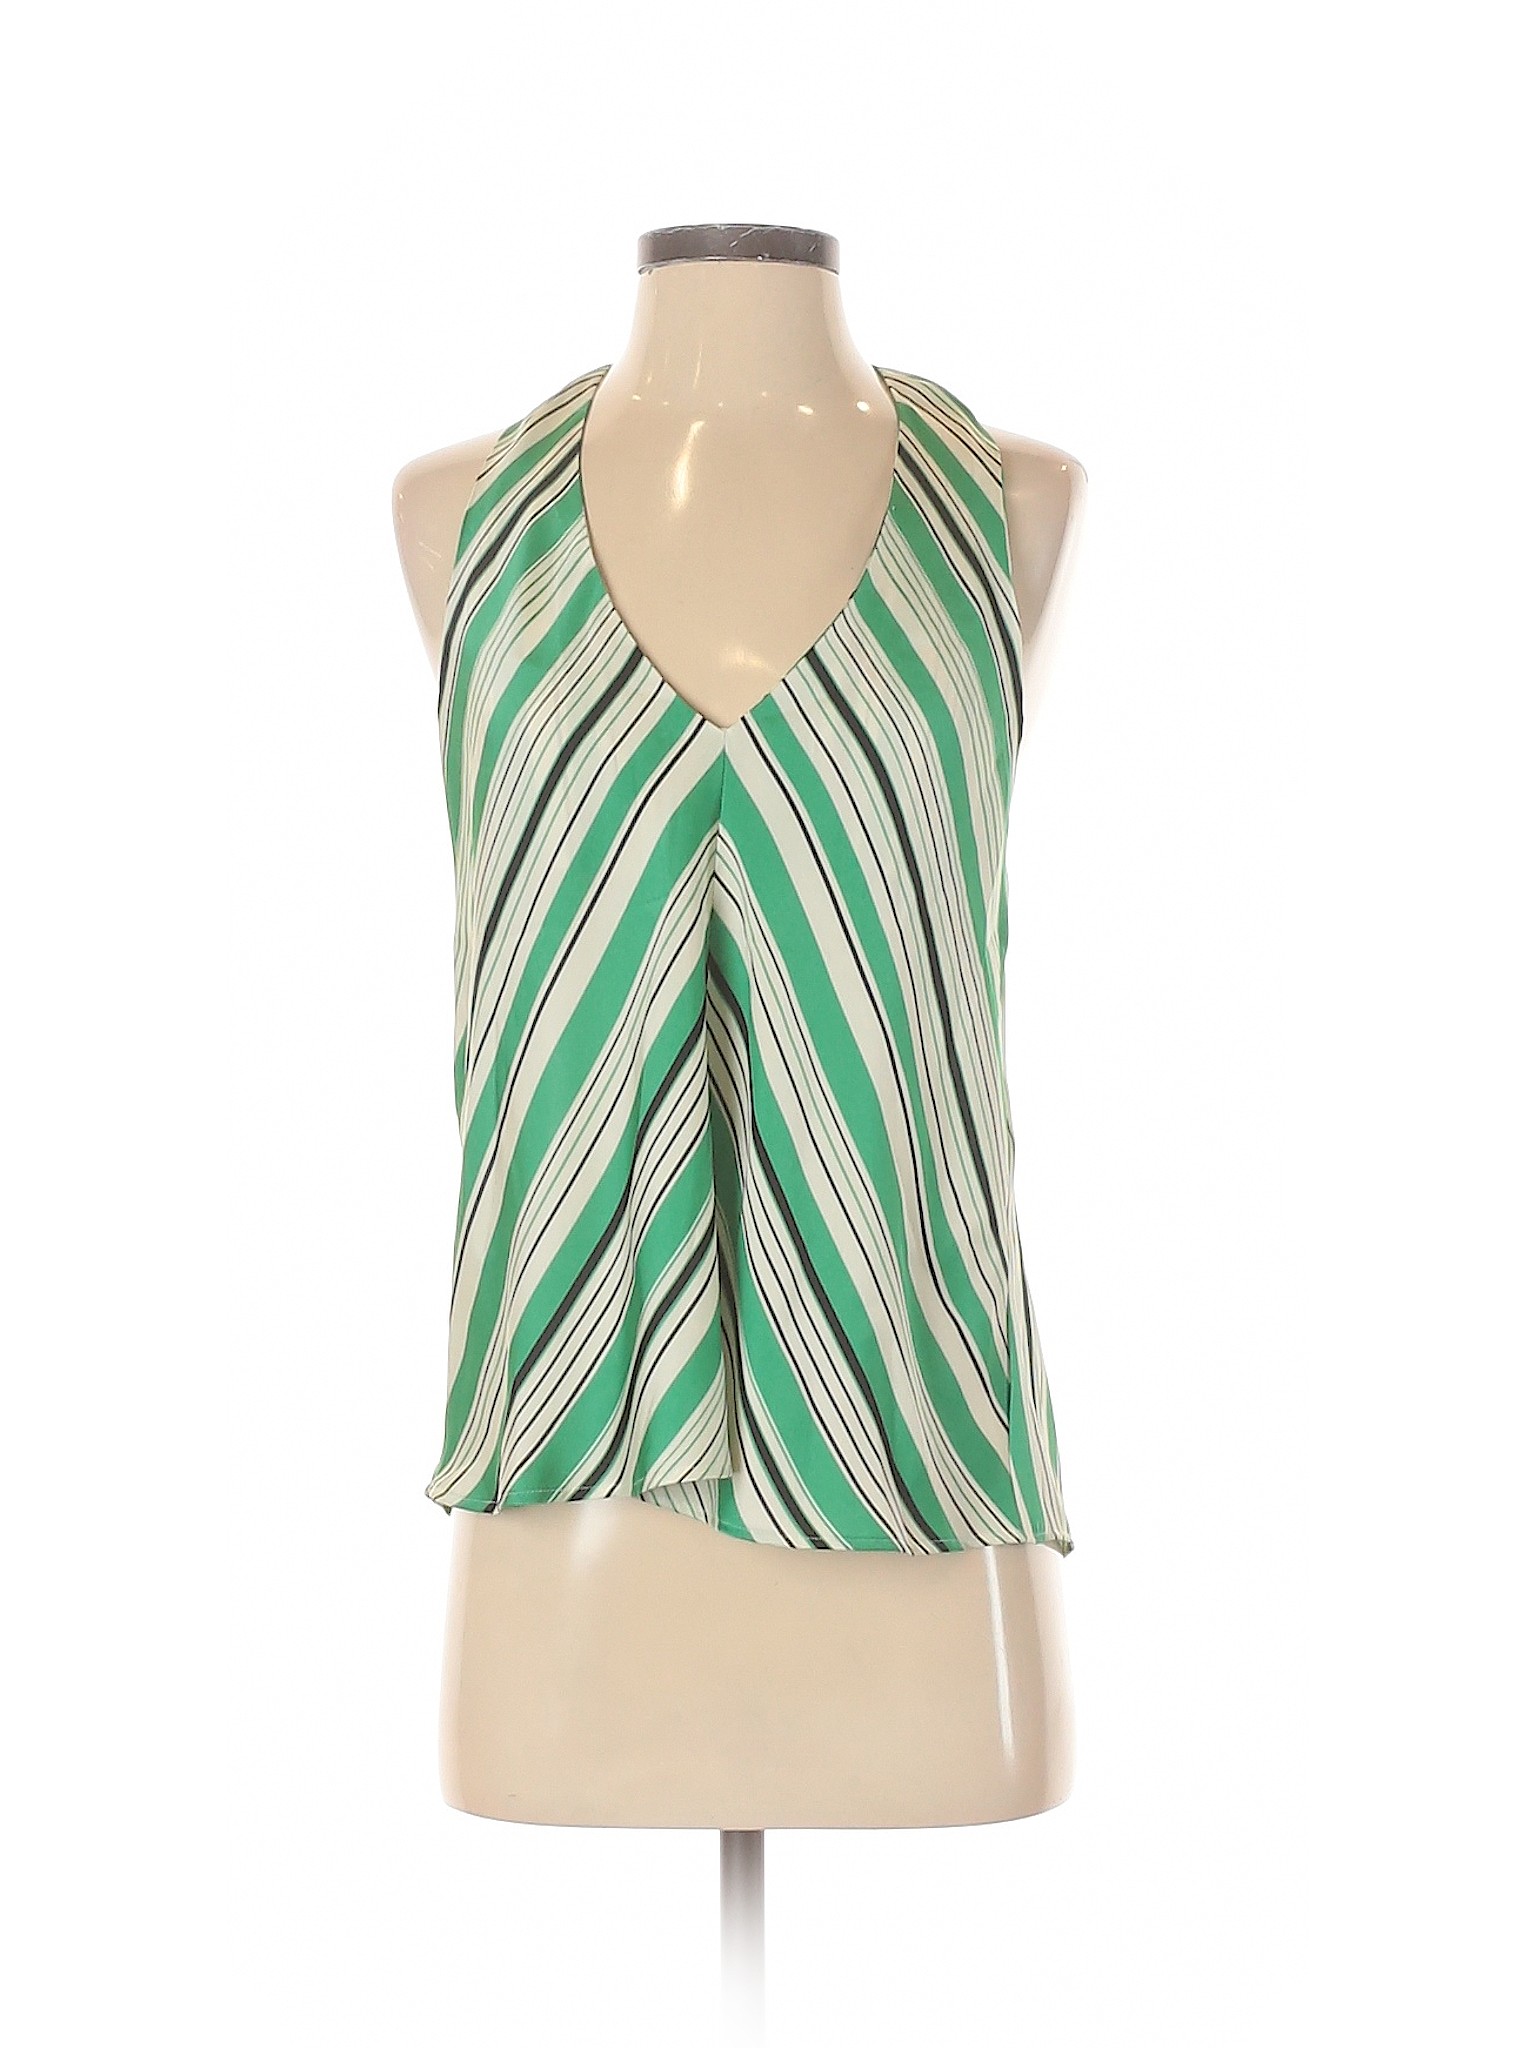 Zara Women Green Sleeveless Blouse S | eBay